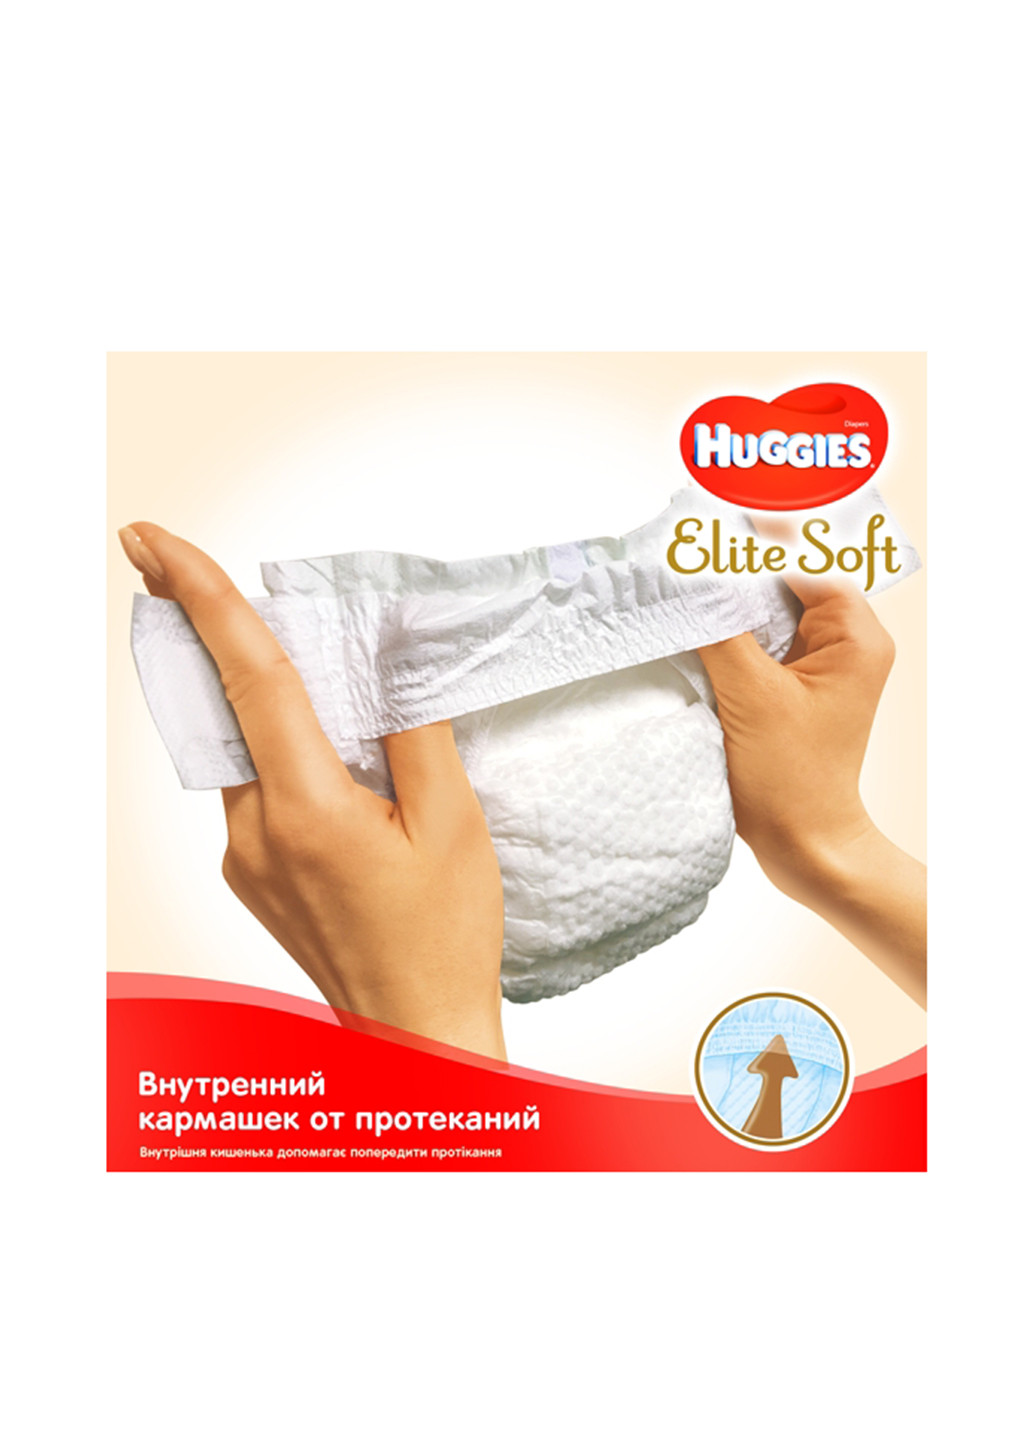 Підгузки Elite Soft Newborn 1 (2-5 кг), (100 шт.) Huggies (130948249)